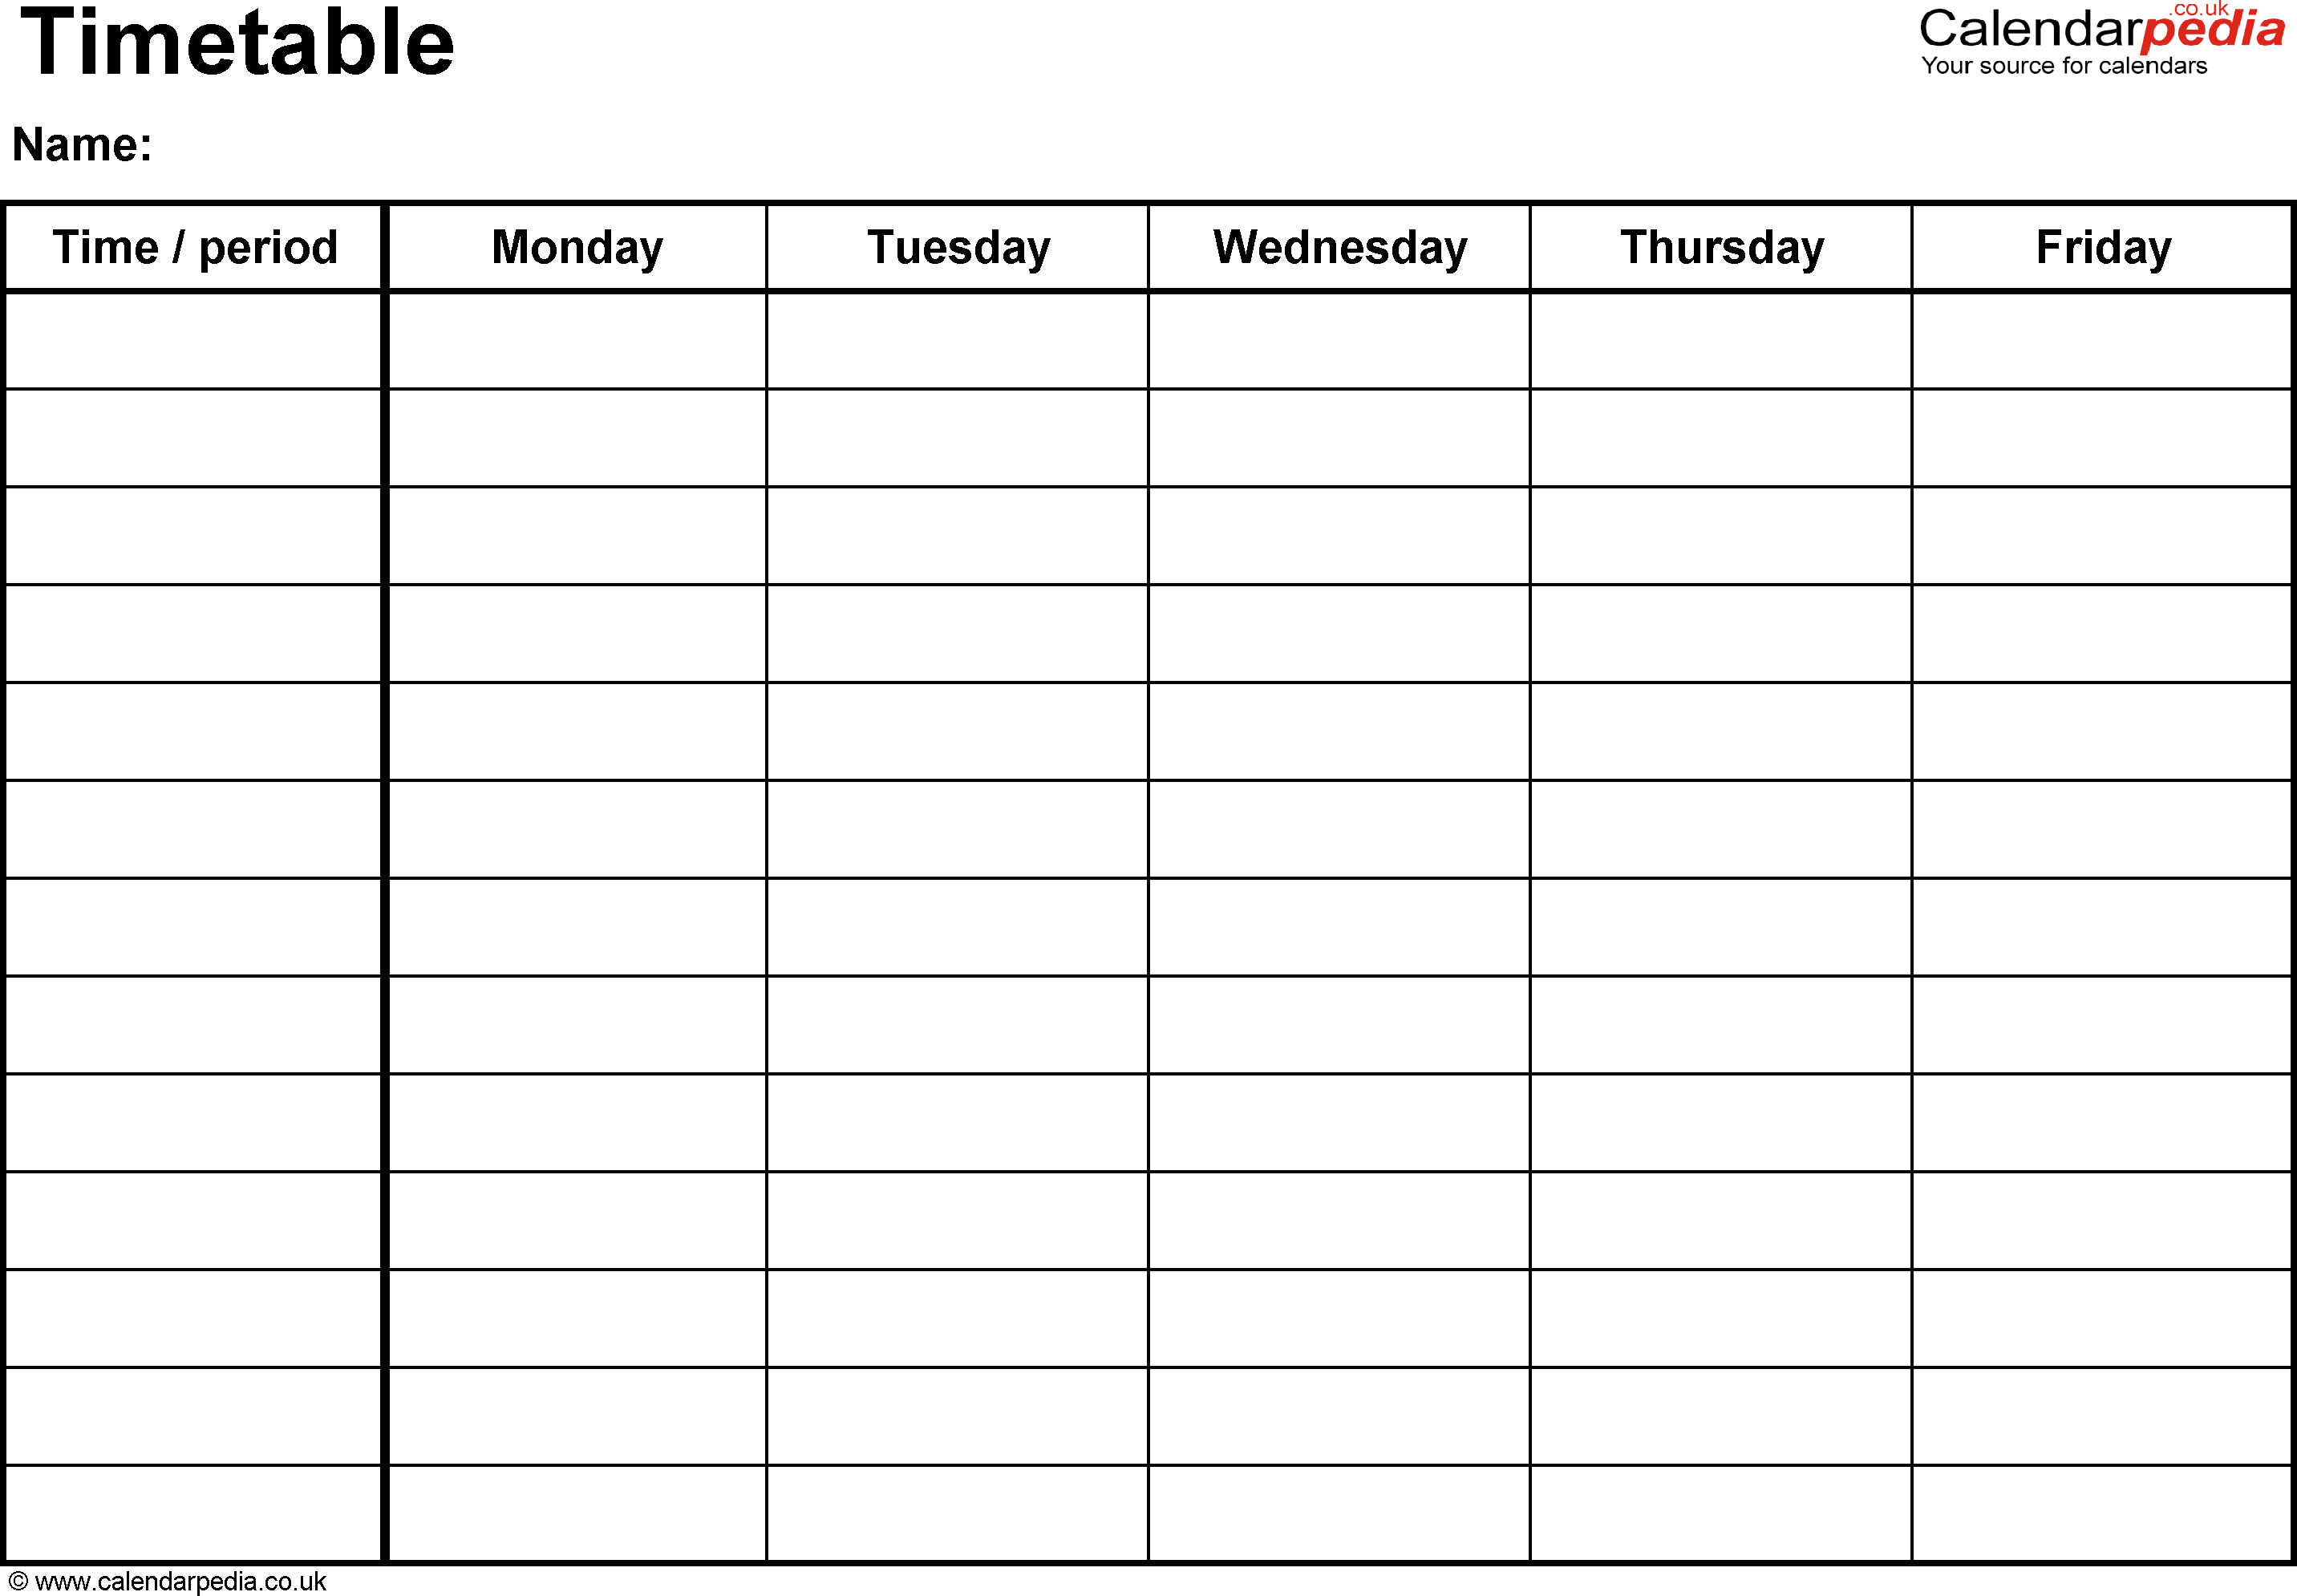 Timetable Templates For Microsoft Word - Free And Printable